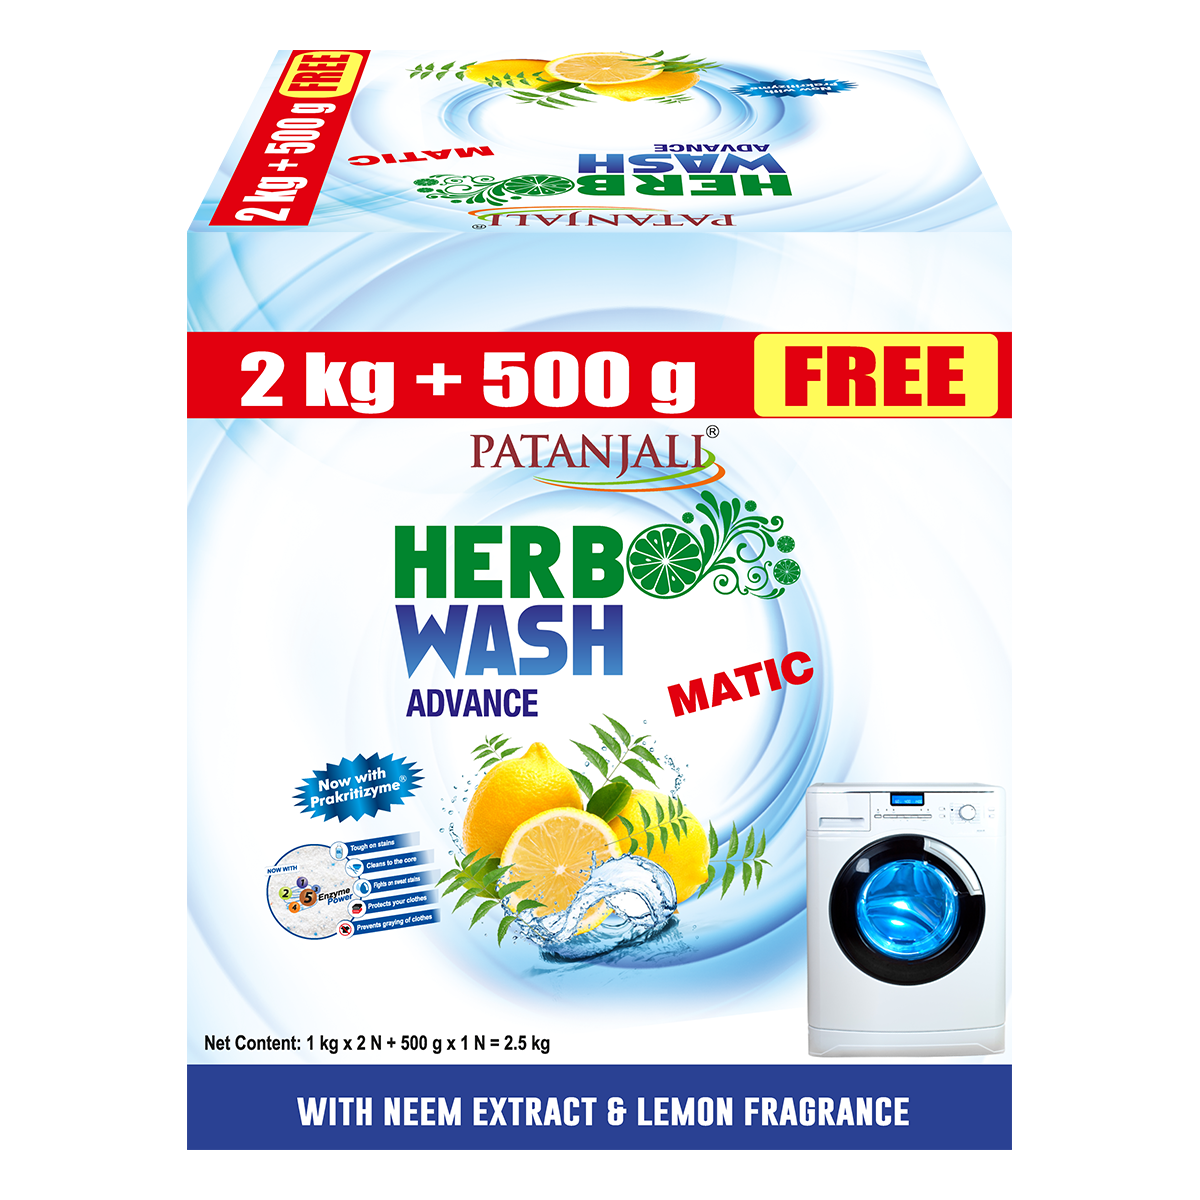 Patanjali Herbo Wash Advance Matic Detergent Powder 2kg + Free 500g